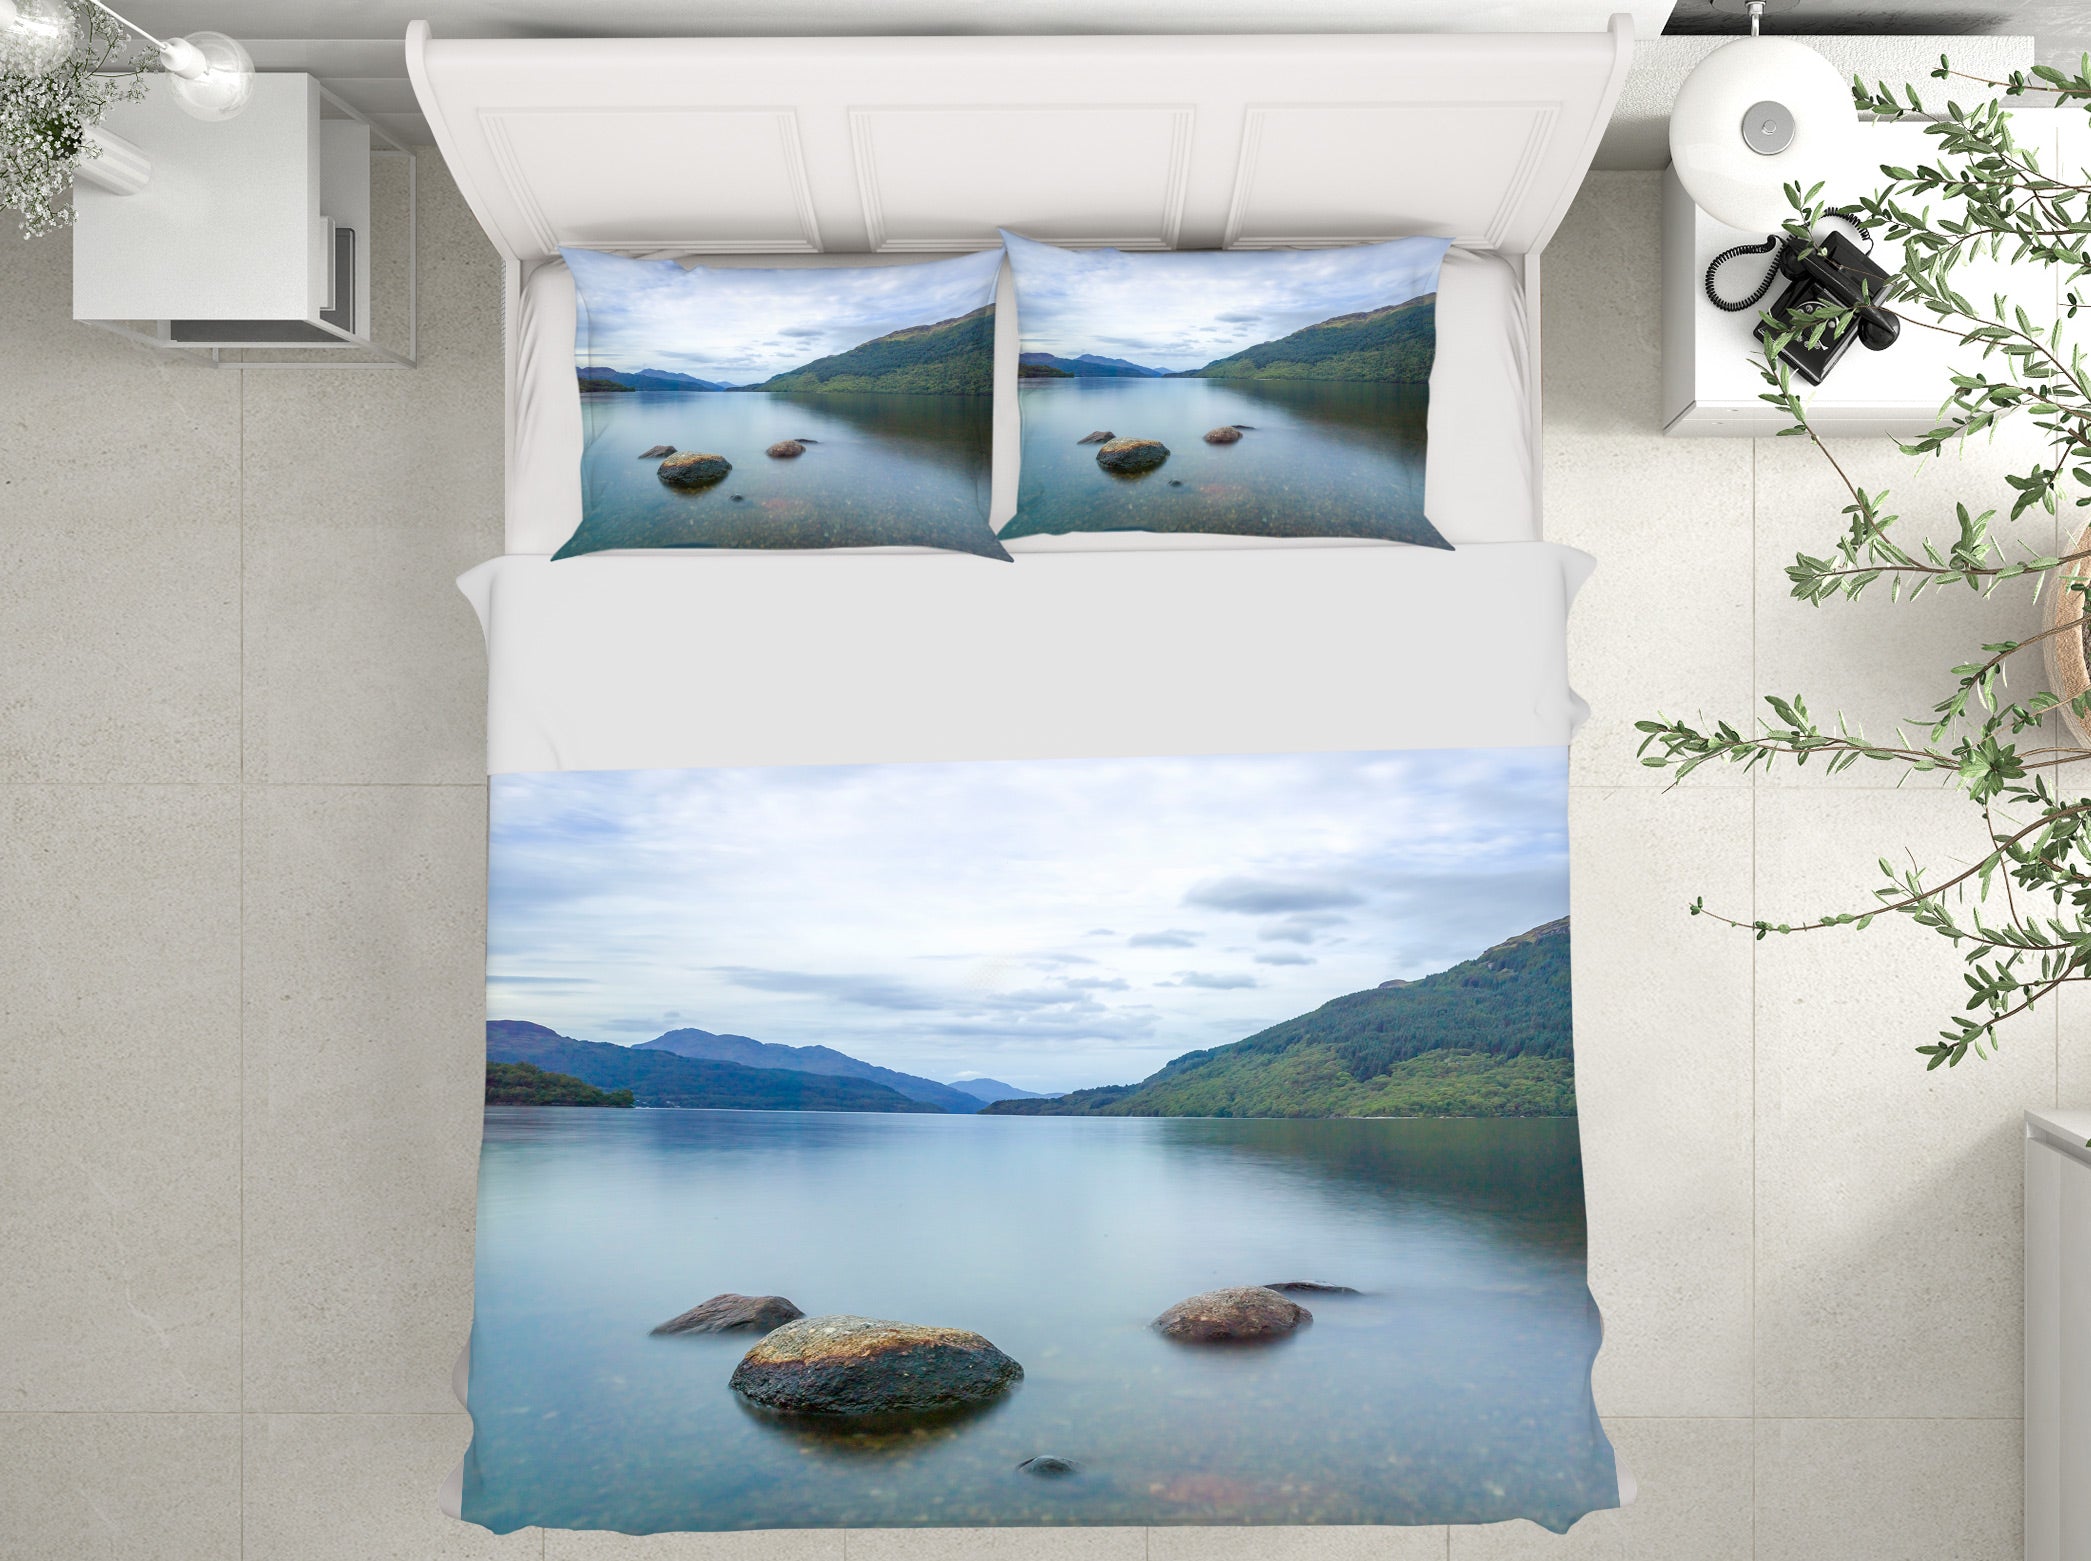 3D Stone Lake 1042 Assaf Frank Bedding Bed Pillowcases Quilt